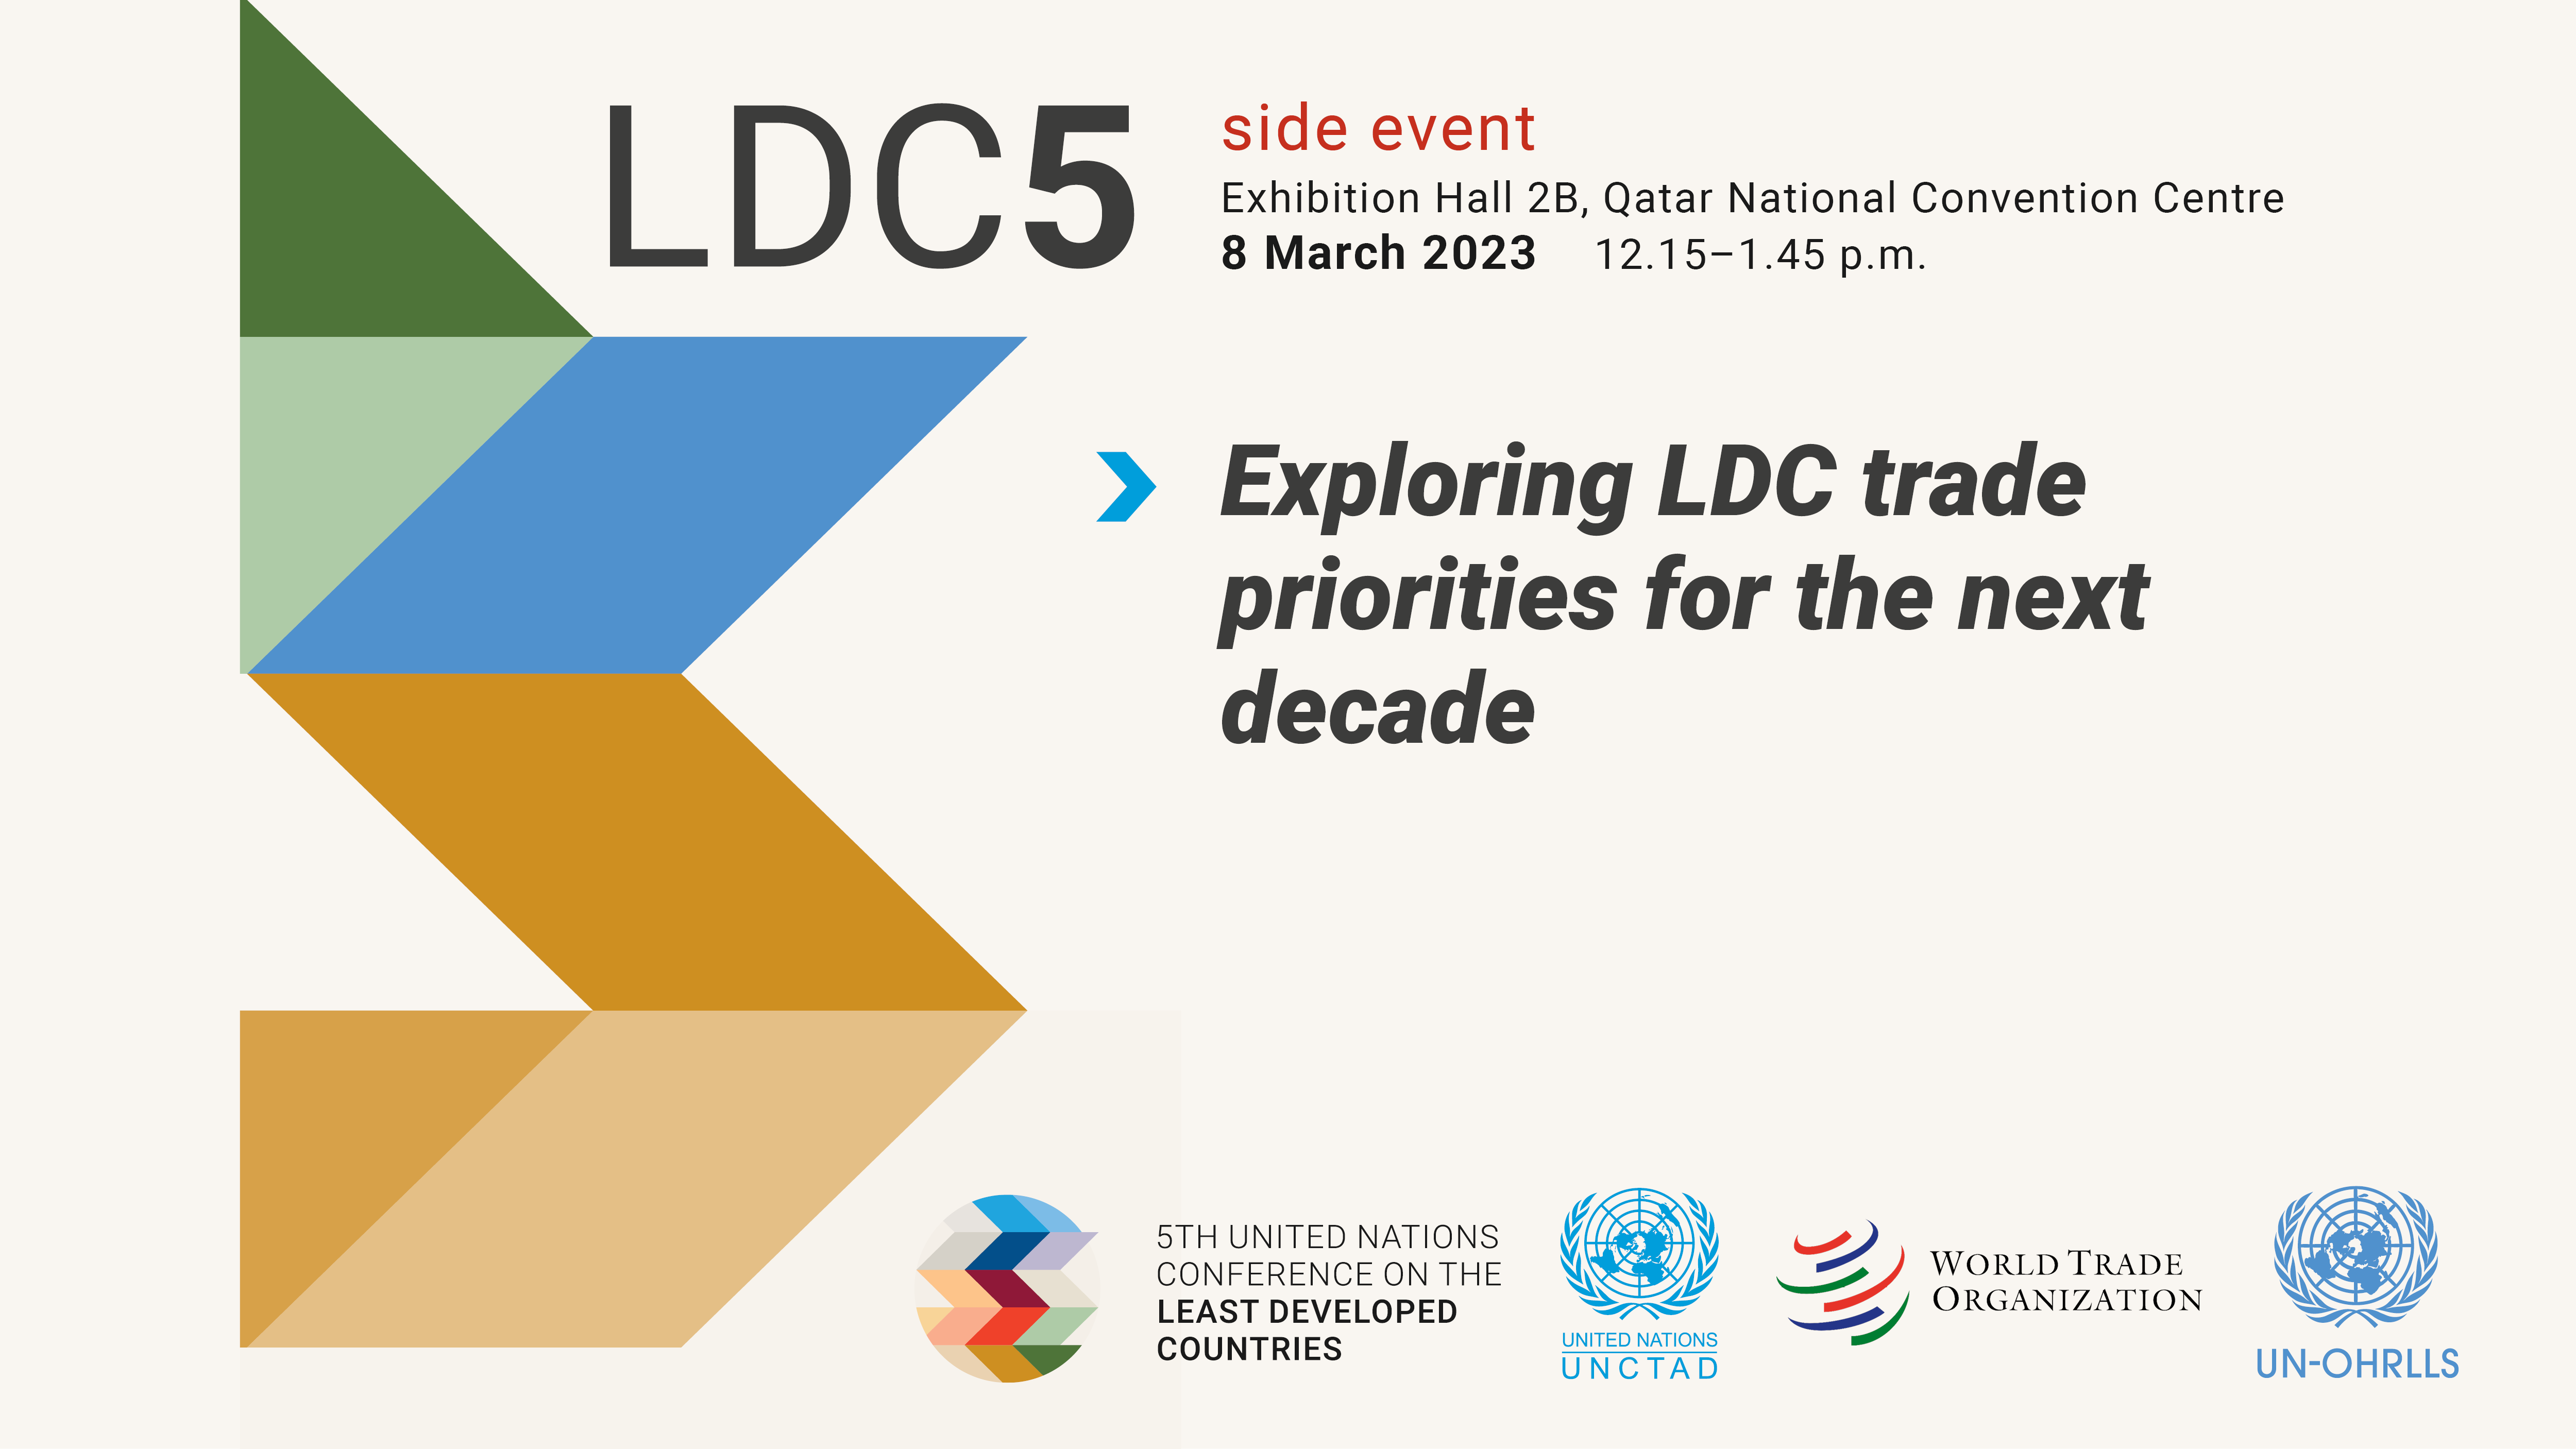 LDC5 side event: Exploring LDC trade priorities for the next decade